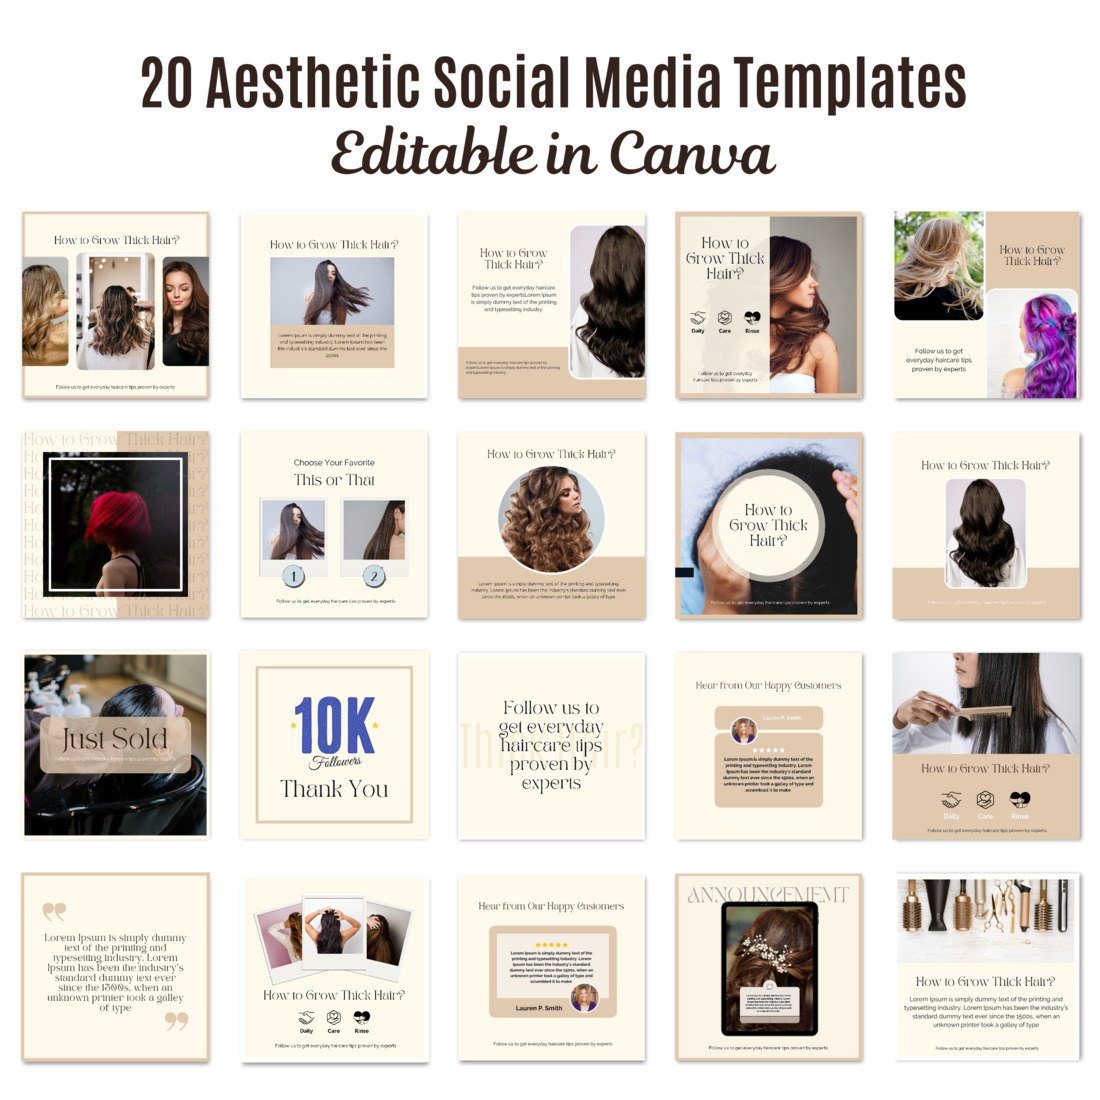 20 Canva Aesthetic Social Media Templates Bundle cover image.